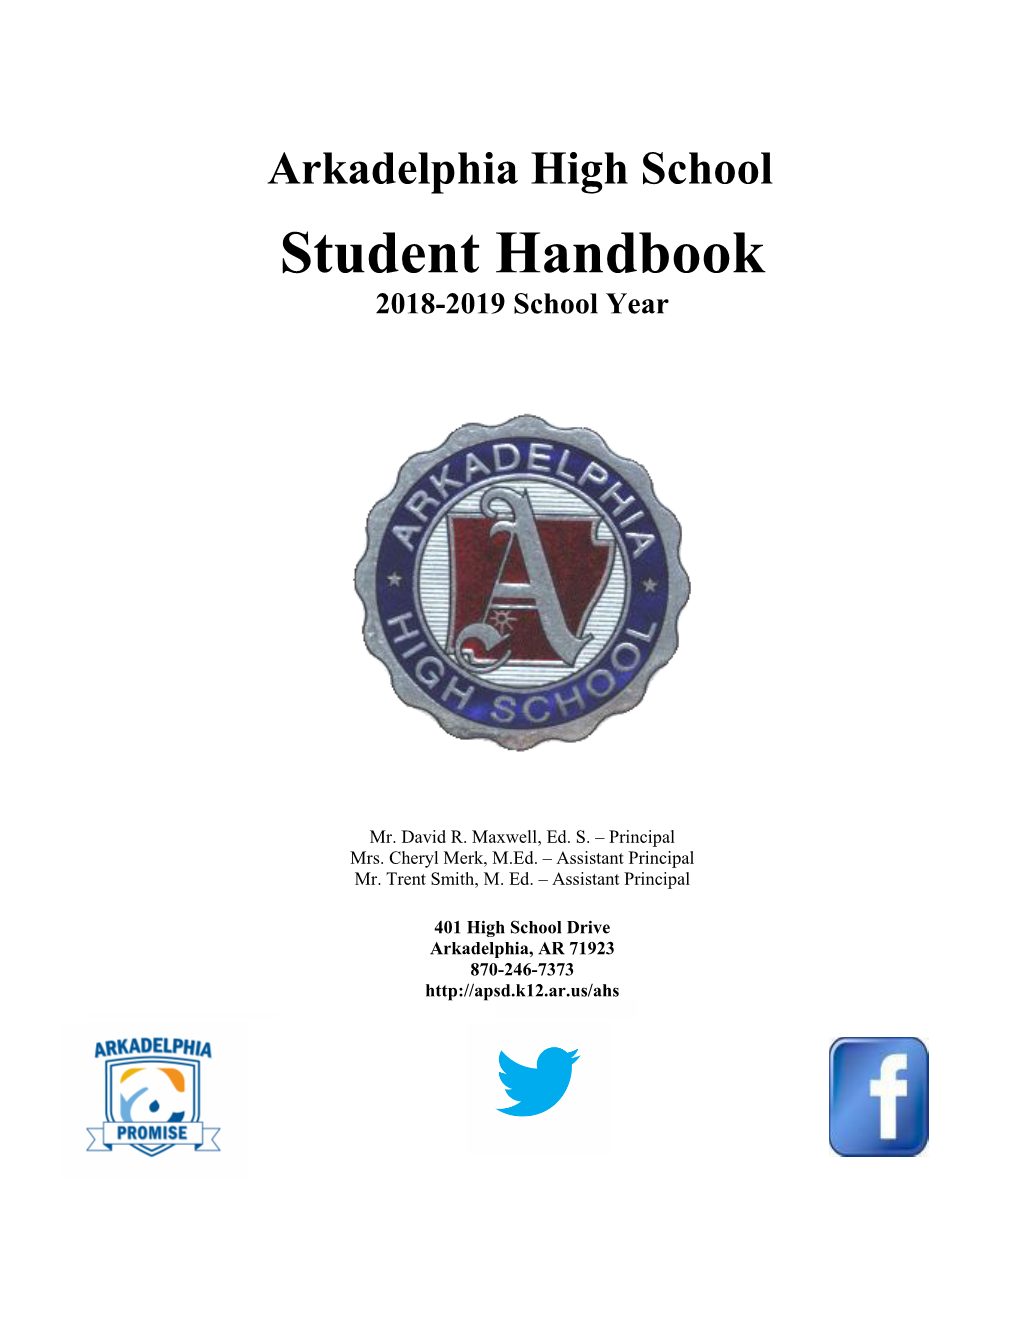 Arkadelphia High School Student Handbook 2018-2019 School Year